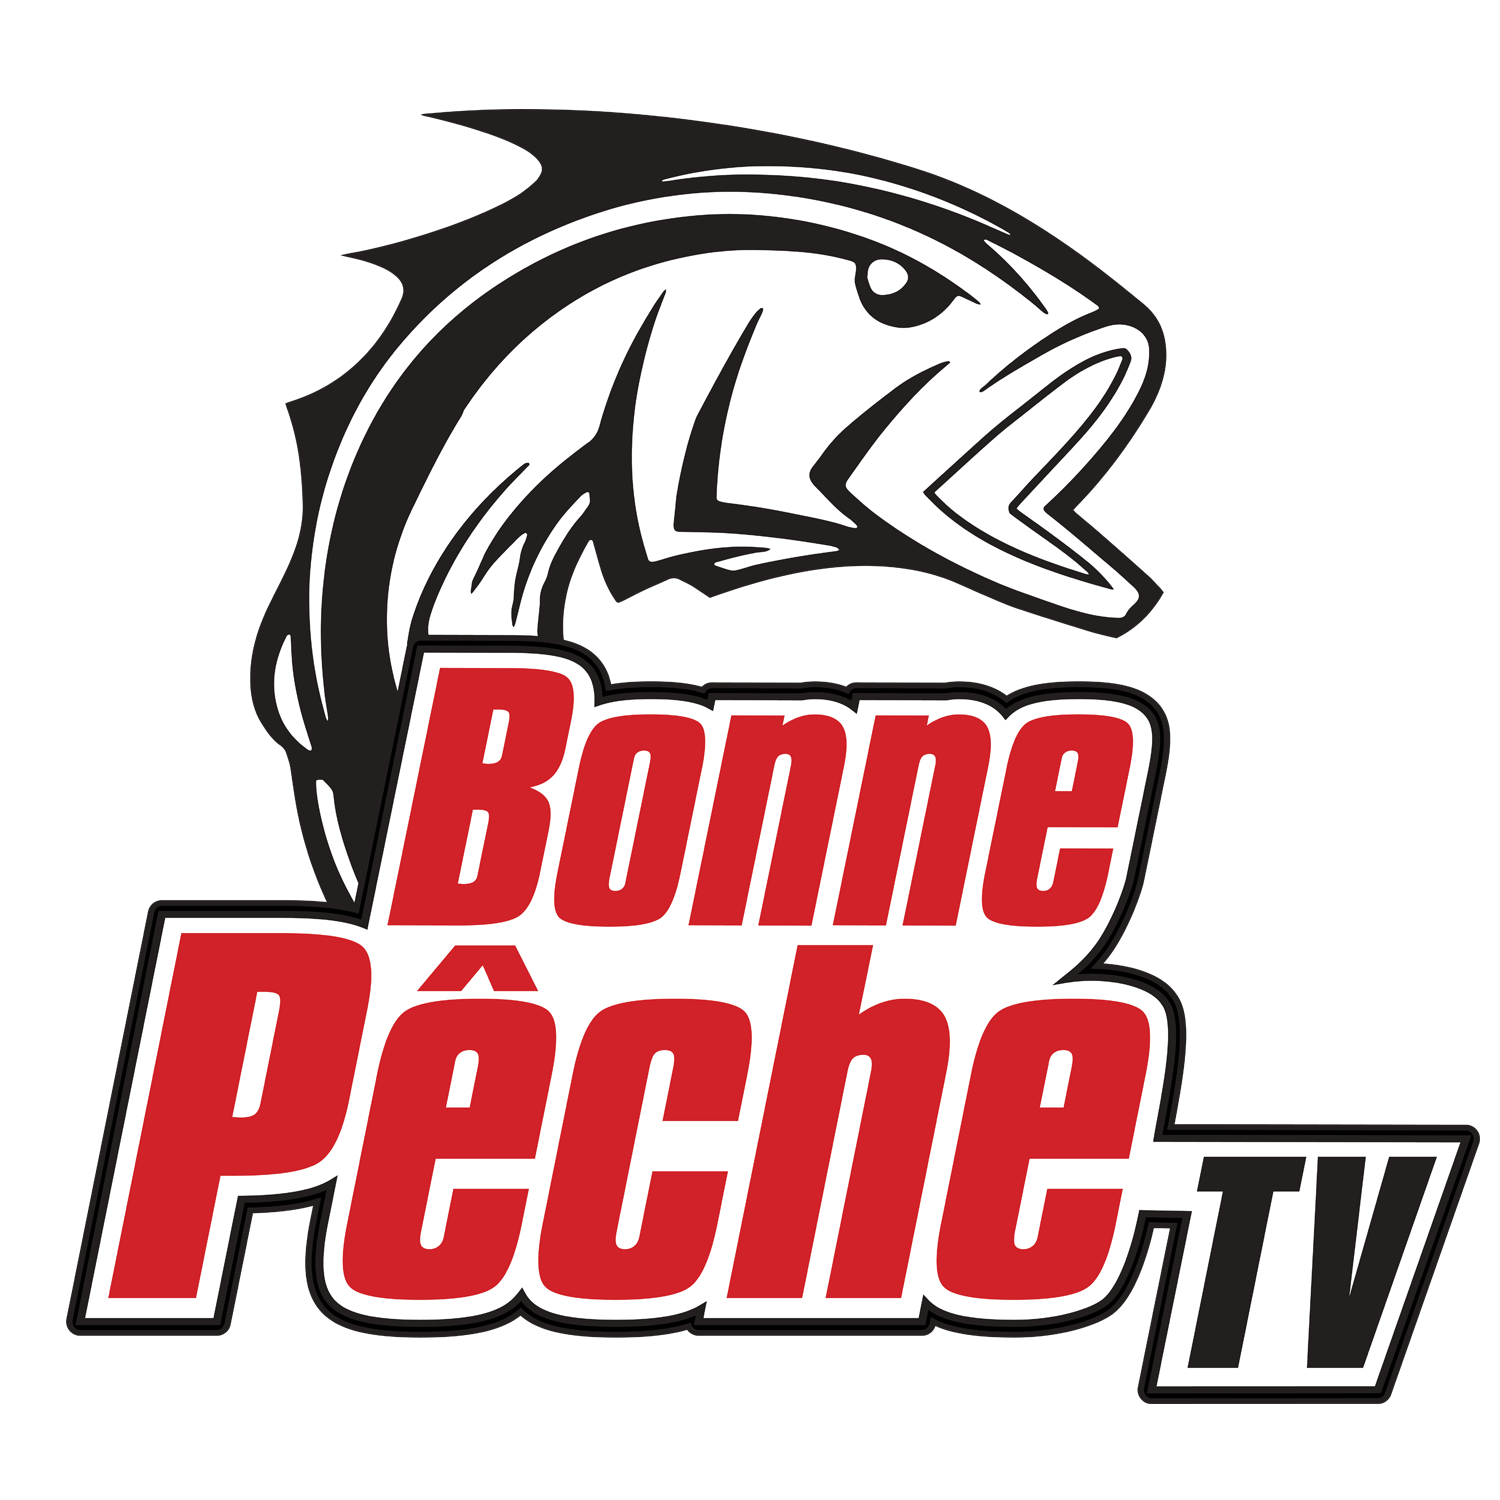 BONNE PECHE TV